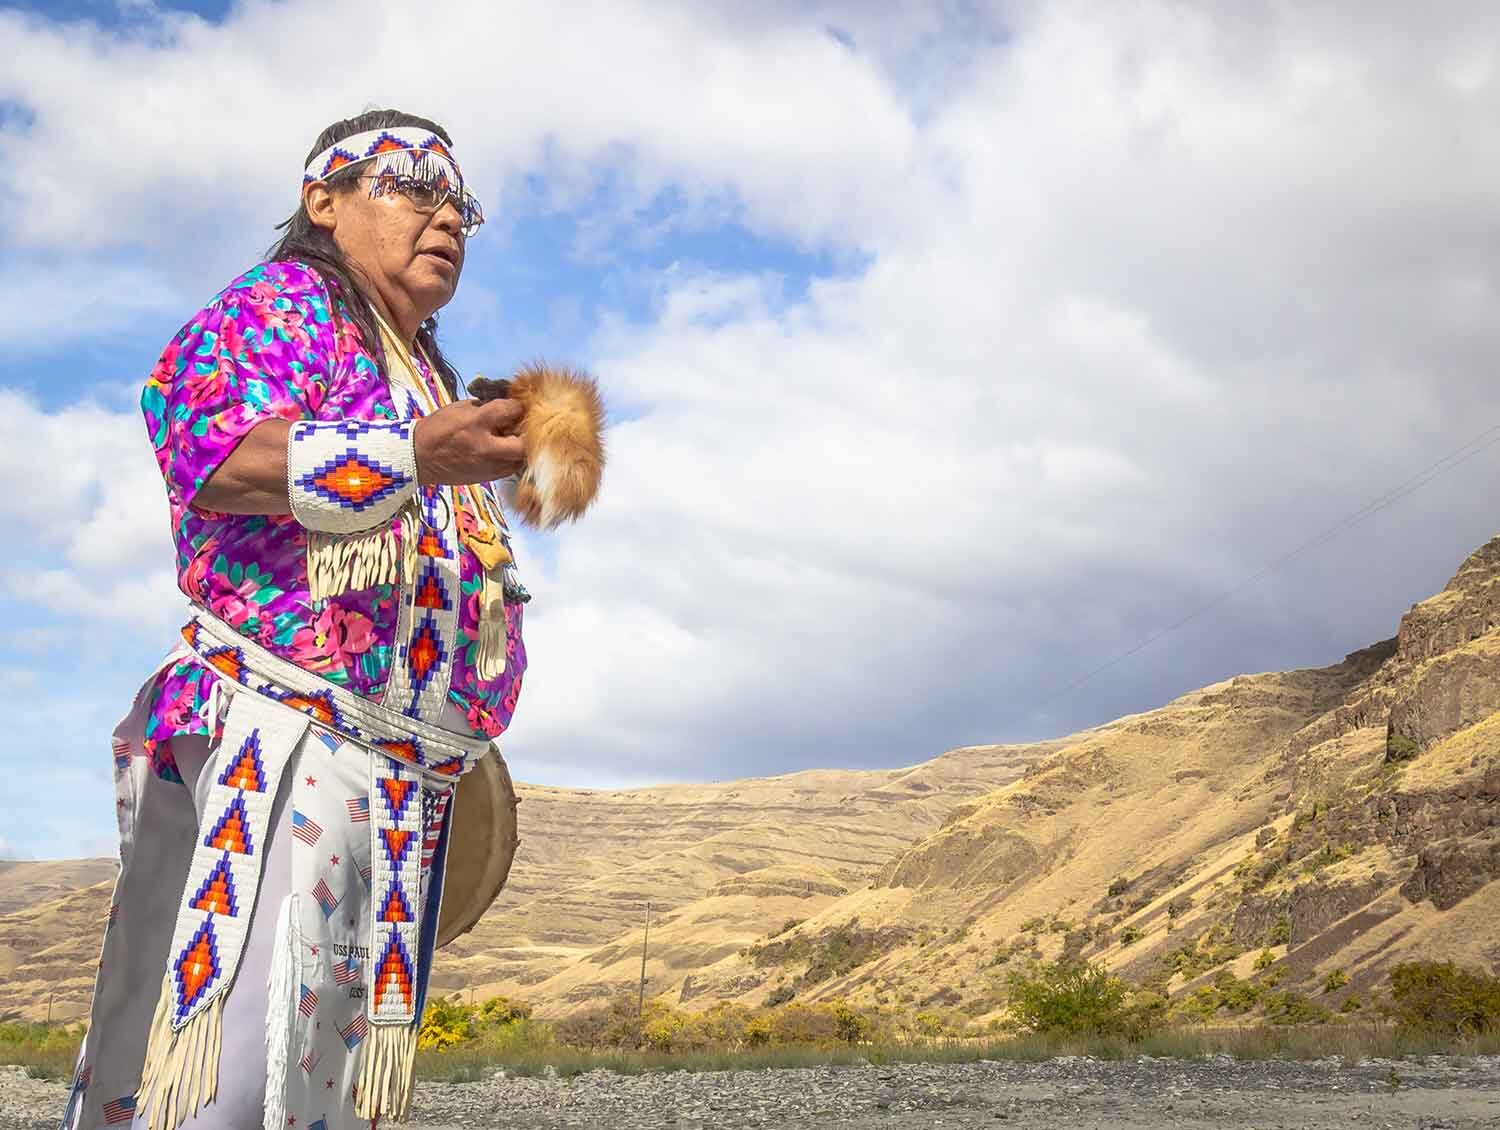 Nez Perce Tourism